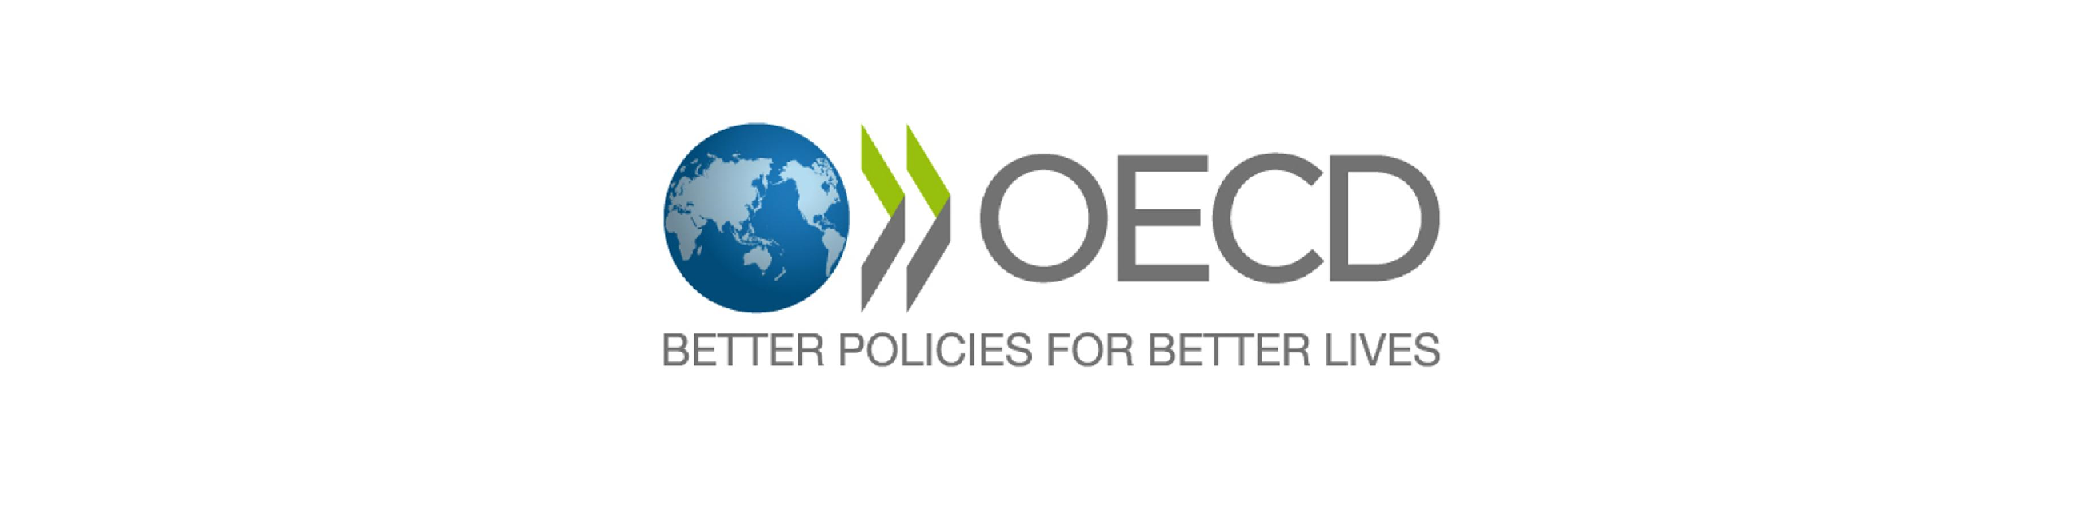 OECDnew.png